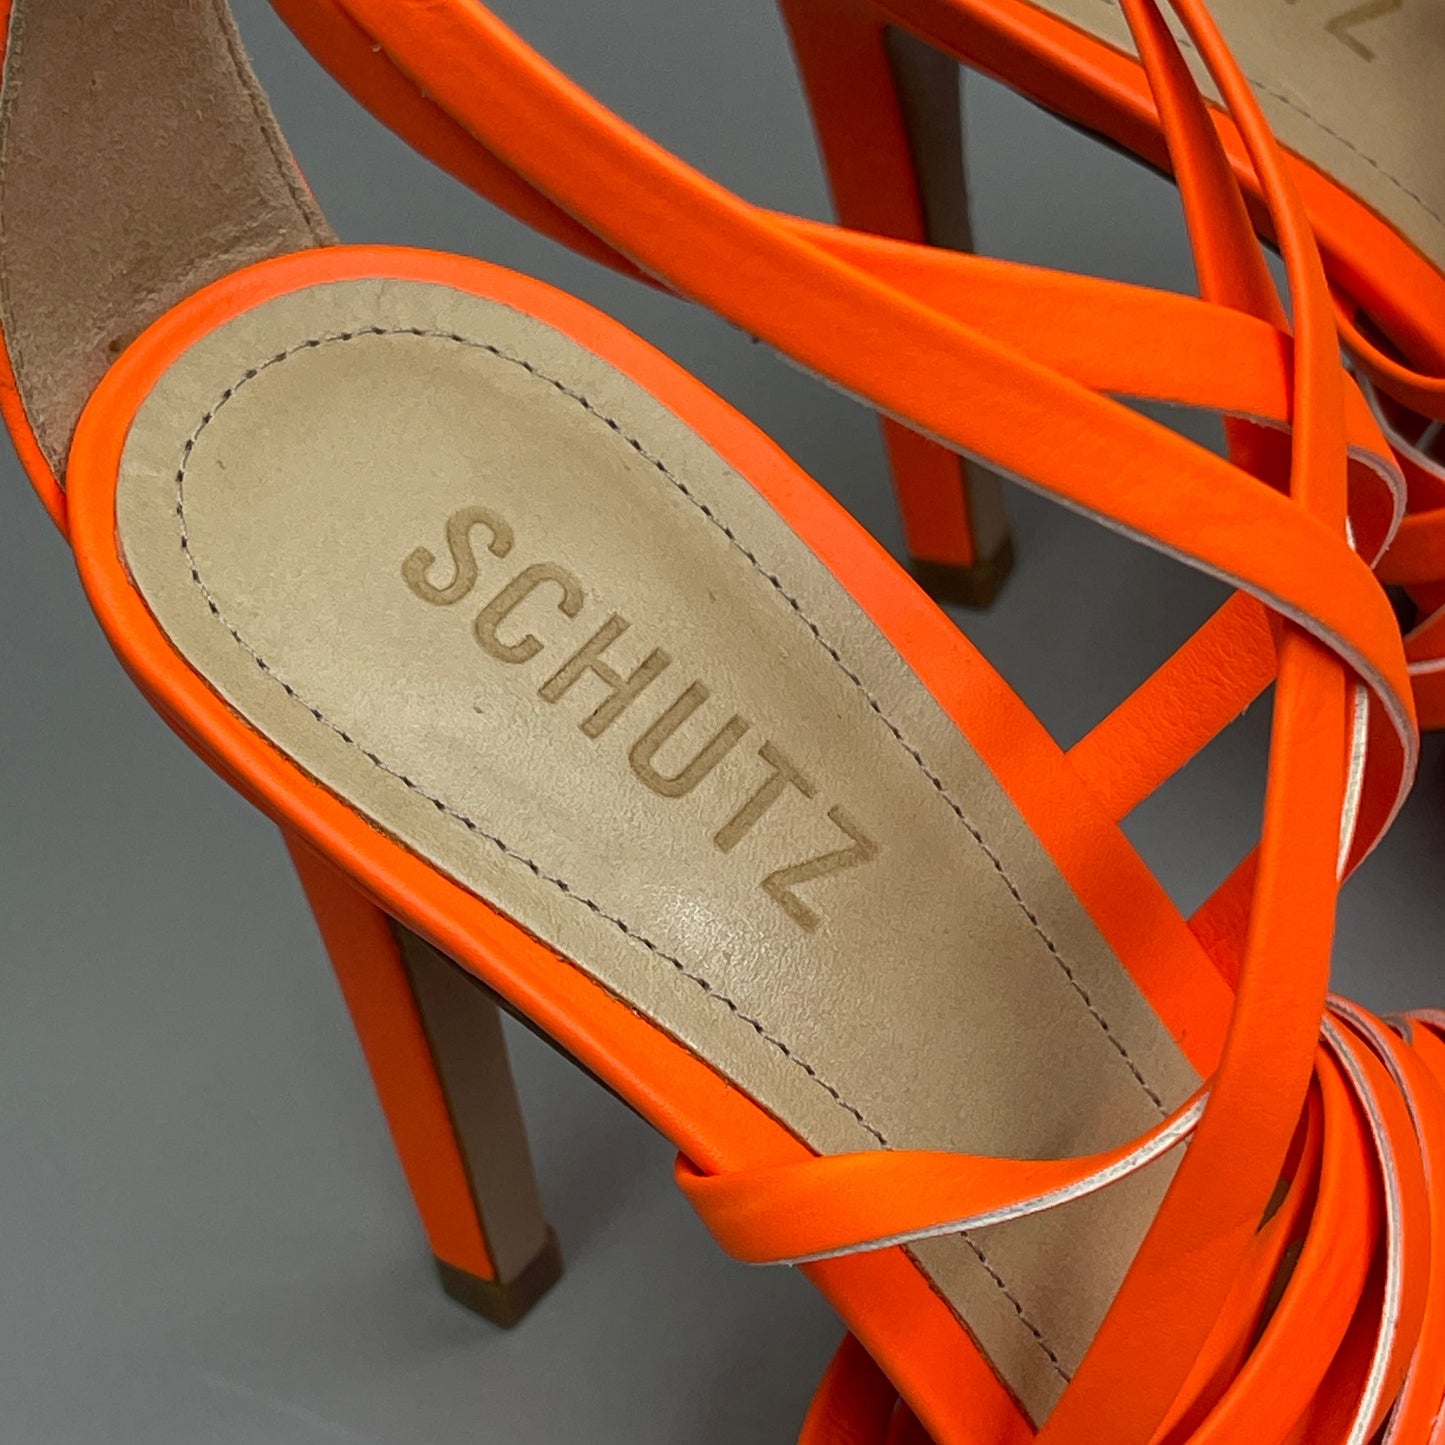 SCHUTZ Bryce Ankle Tie Women's High Heel Leather Strappy Sandal Acid Orange Sz 6.5 (New)